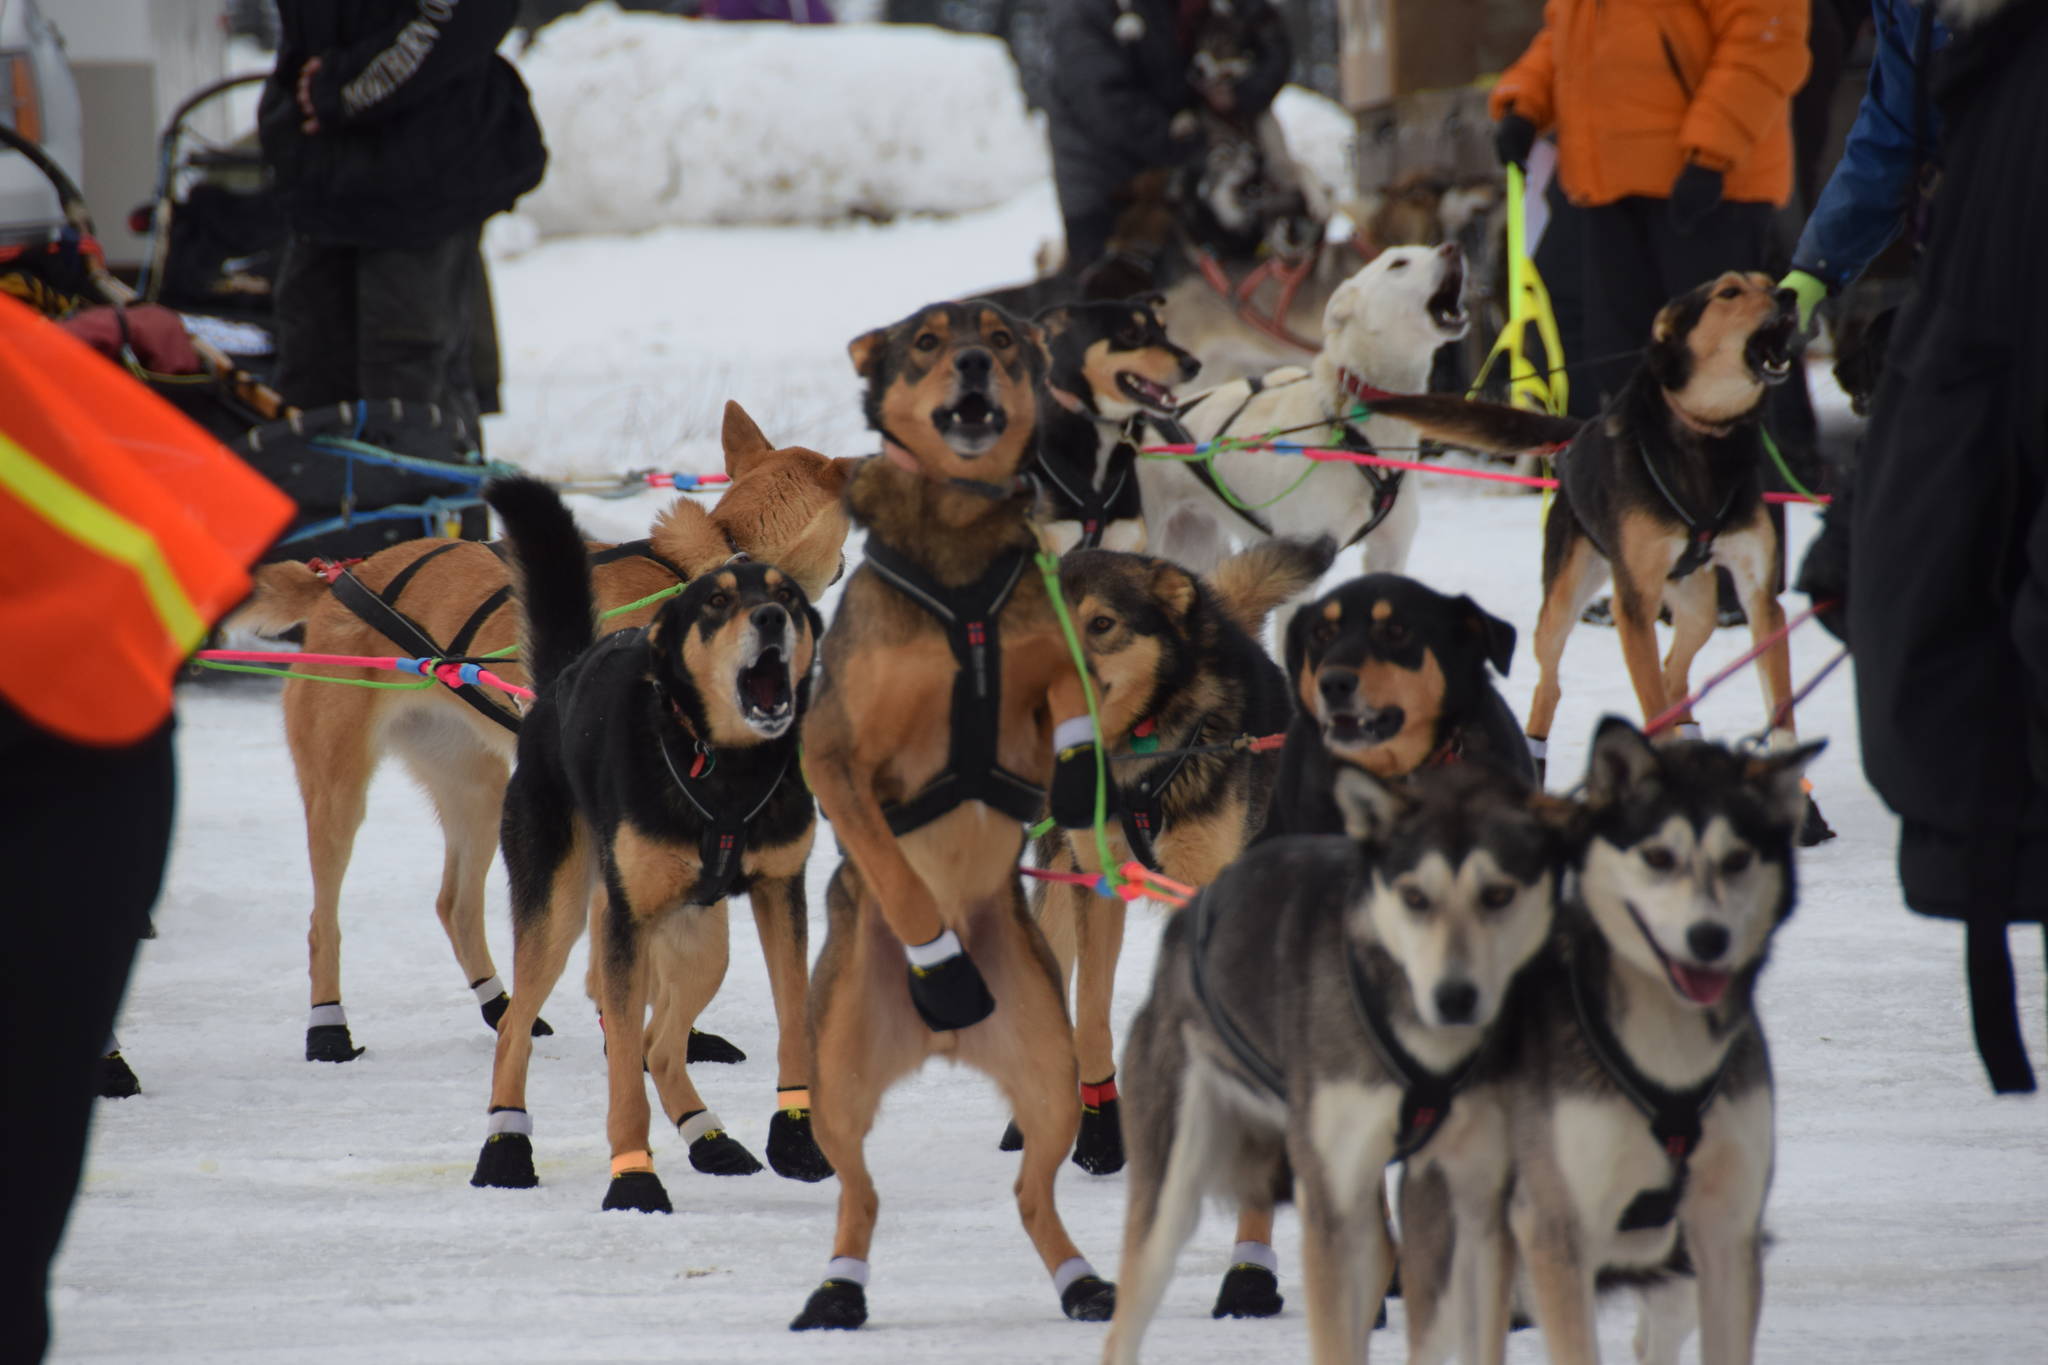 Musher teams competing in the Tustumena 200 Sled Dog Race take off from Freddie’s Roadhouse on Saturday, Jan. 26, 2019 in Ninilchik, Alaska. (Photo by Brian Mazurek/Peninsula Clarion)